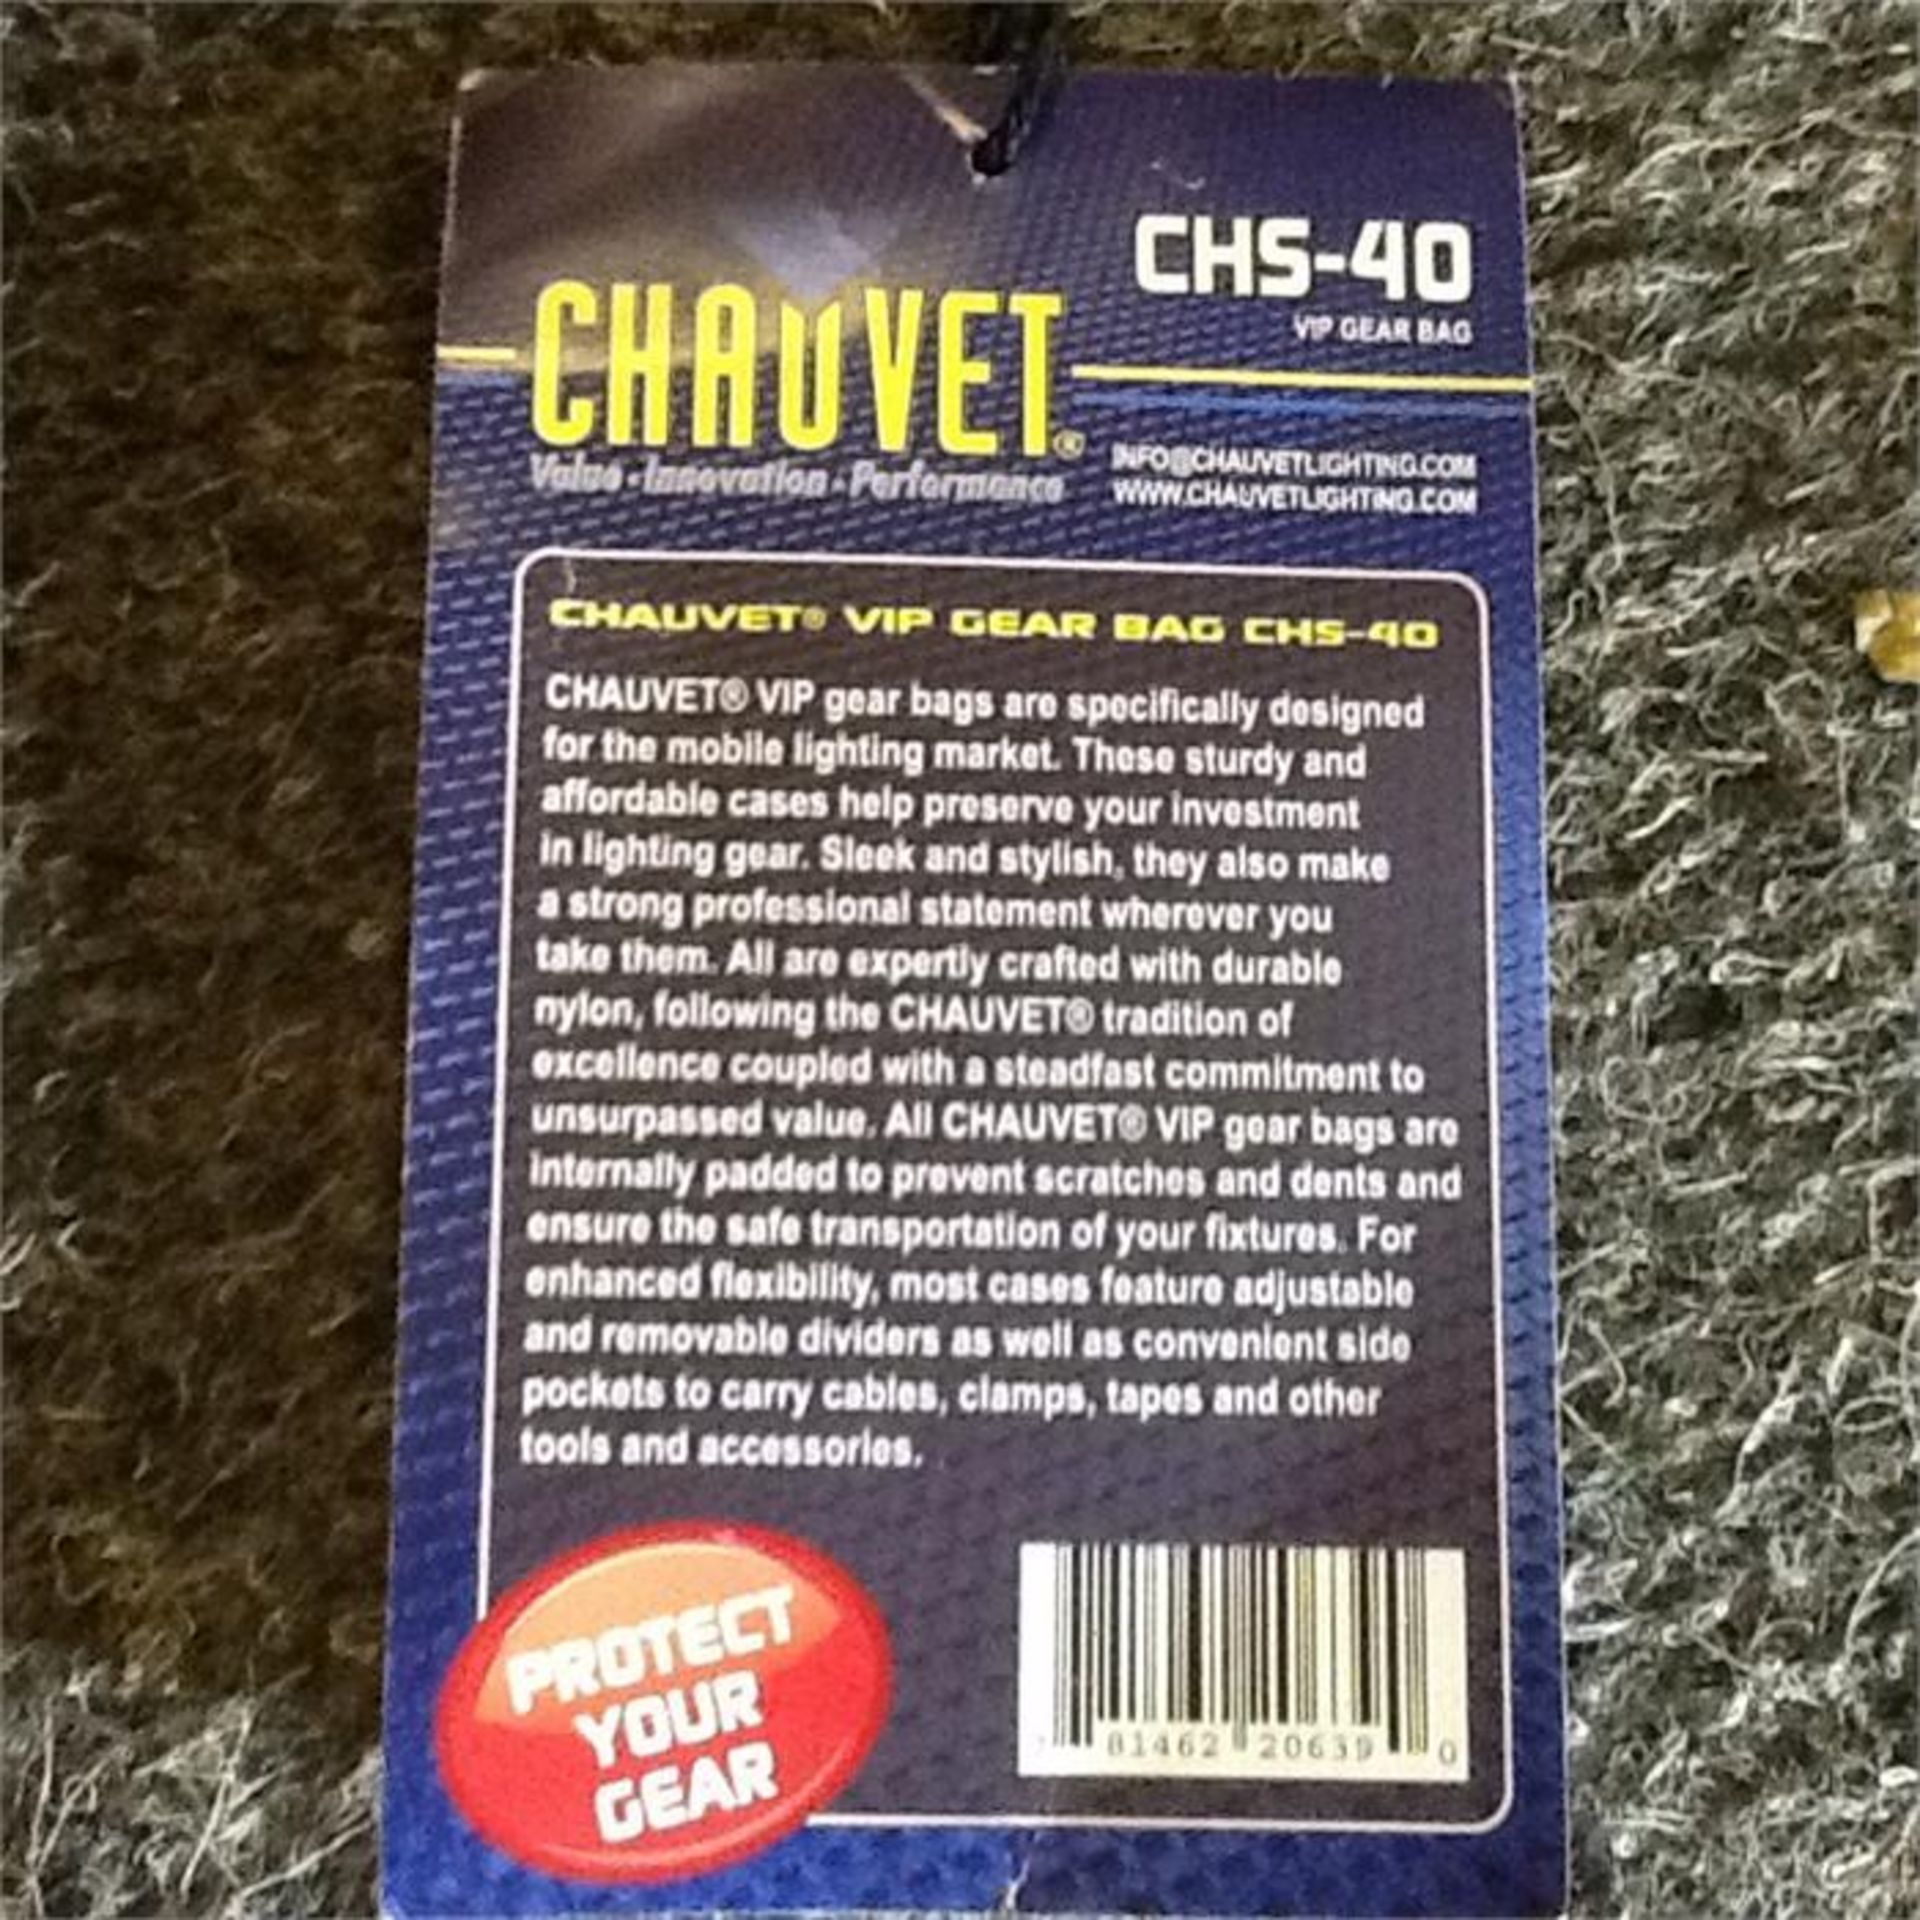 Chauvet  CHS-40 vip gear bag - Image 10 of 10